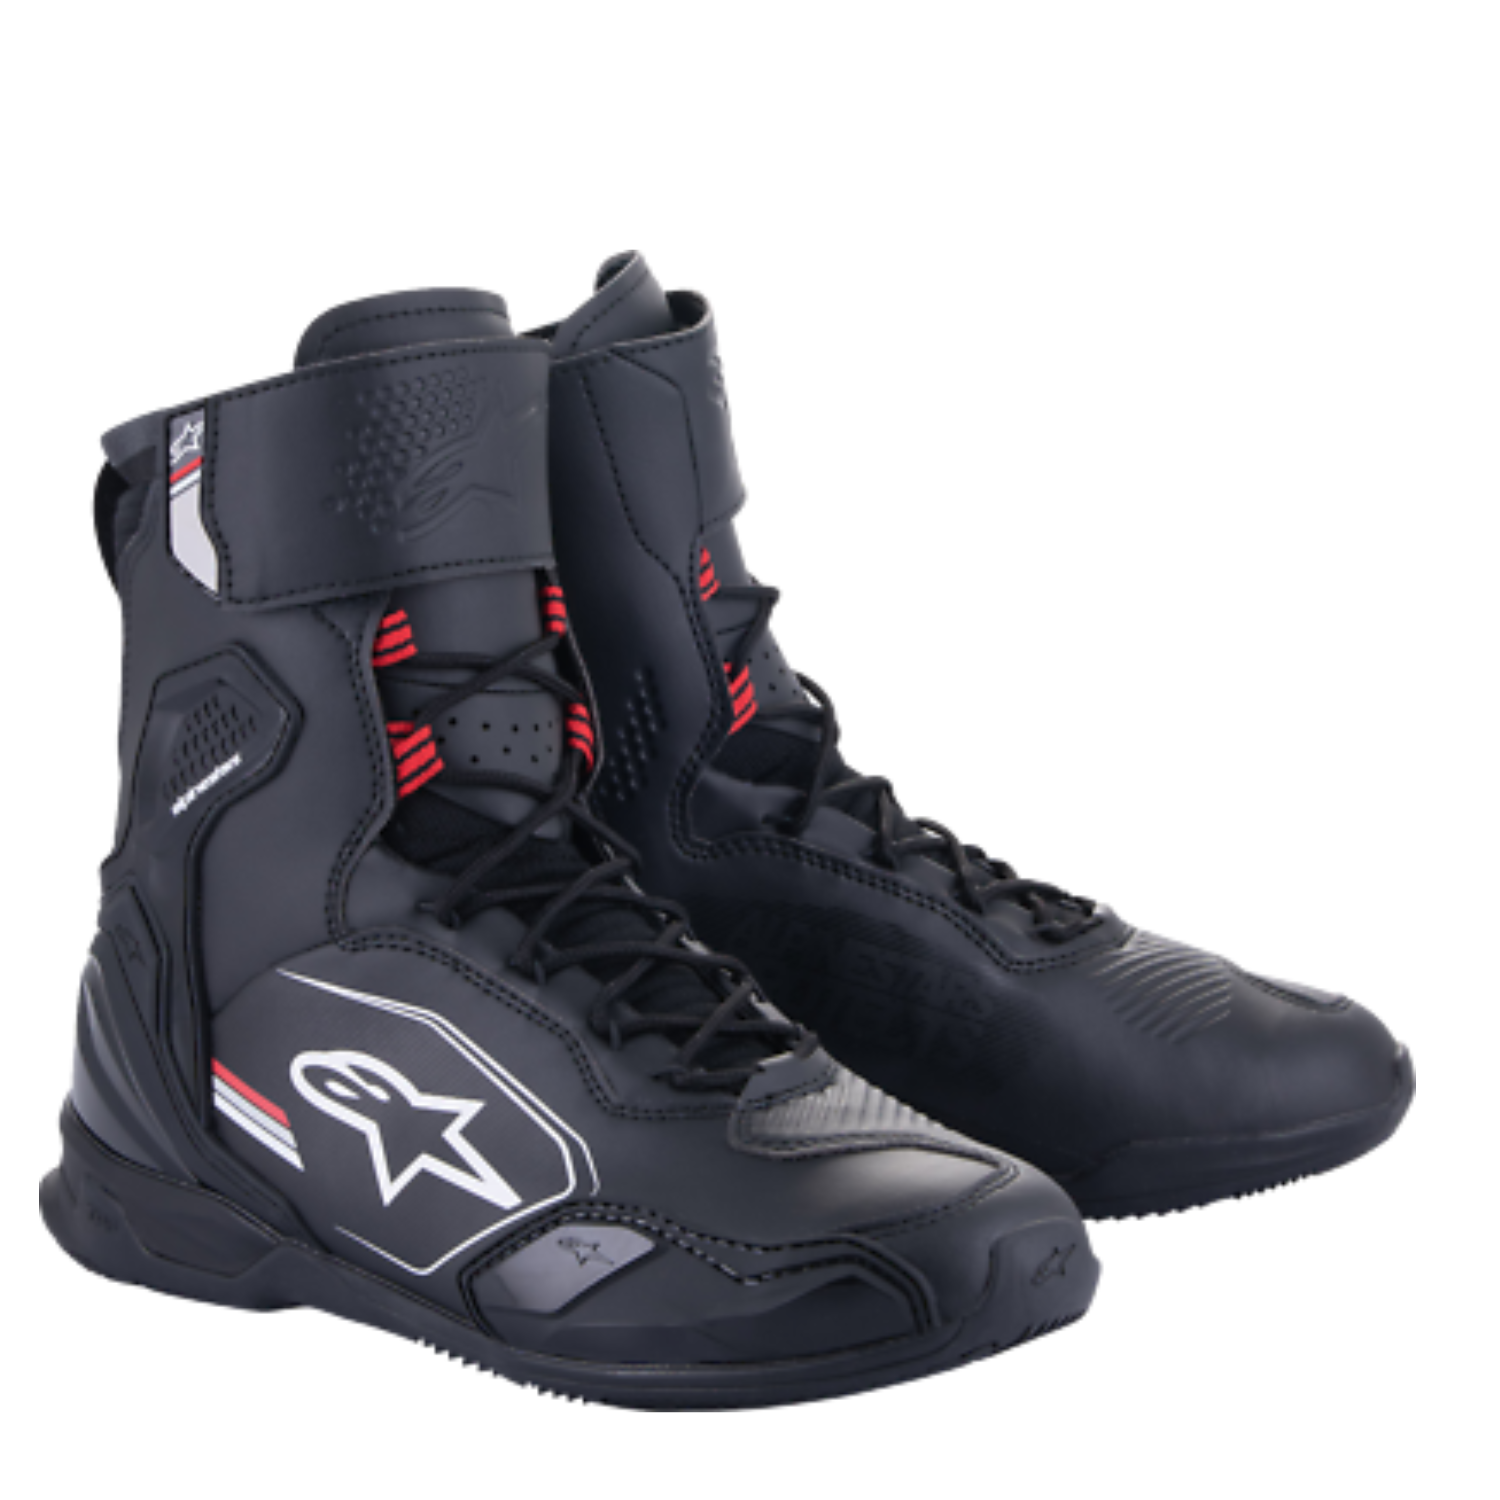 Image of Alpinestars Superfaster Shoes Black Gray Bright Red Größe US 10